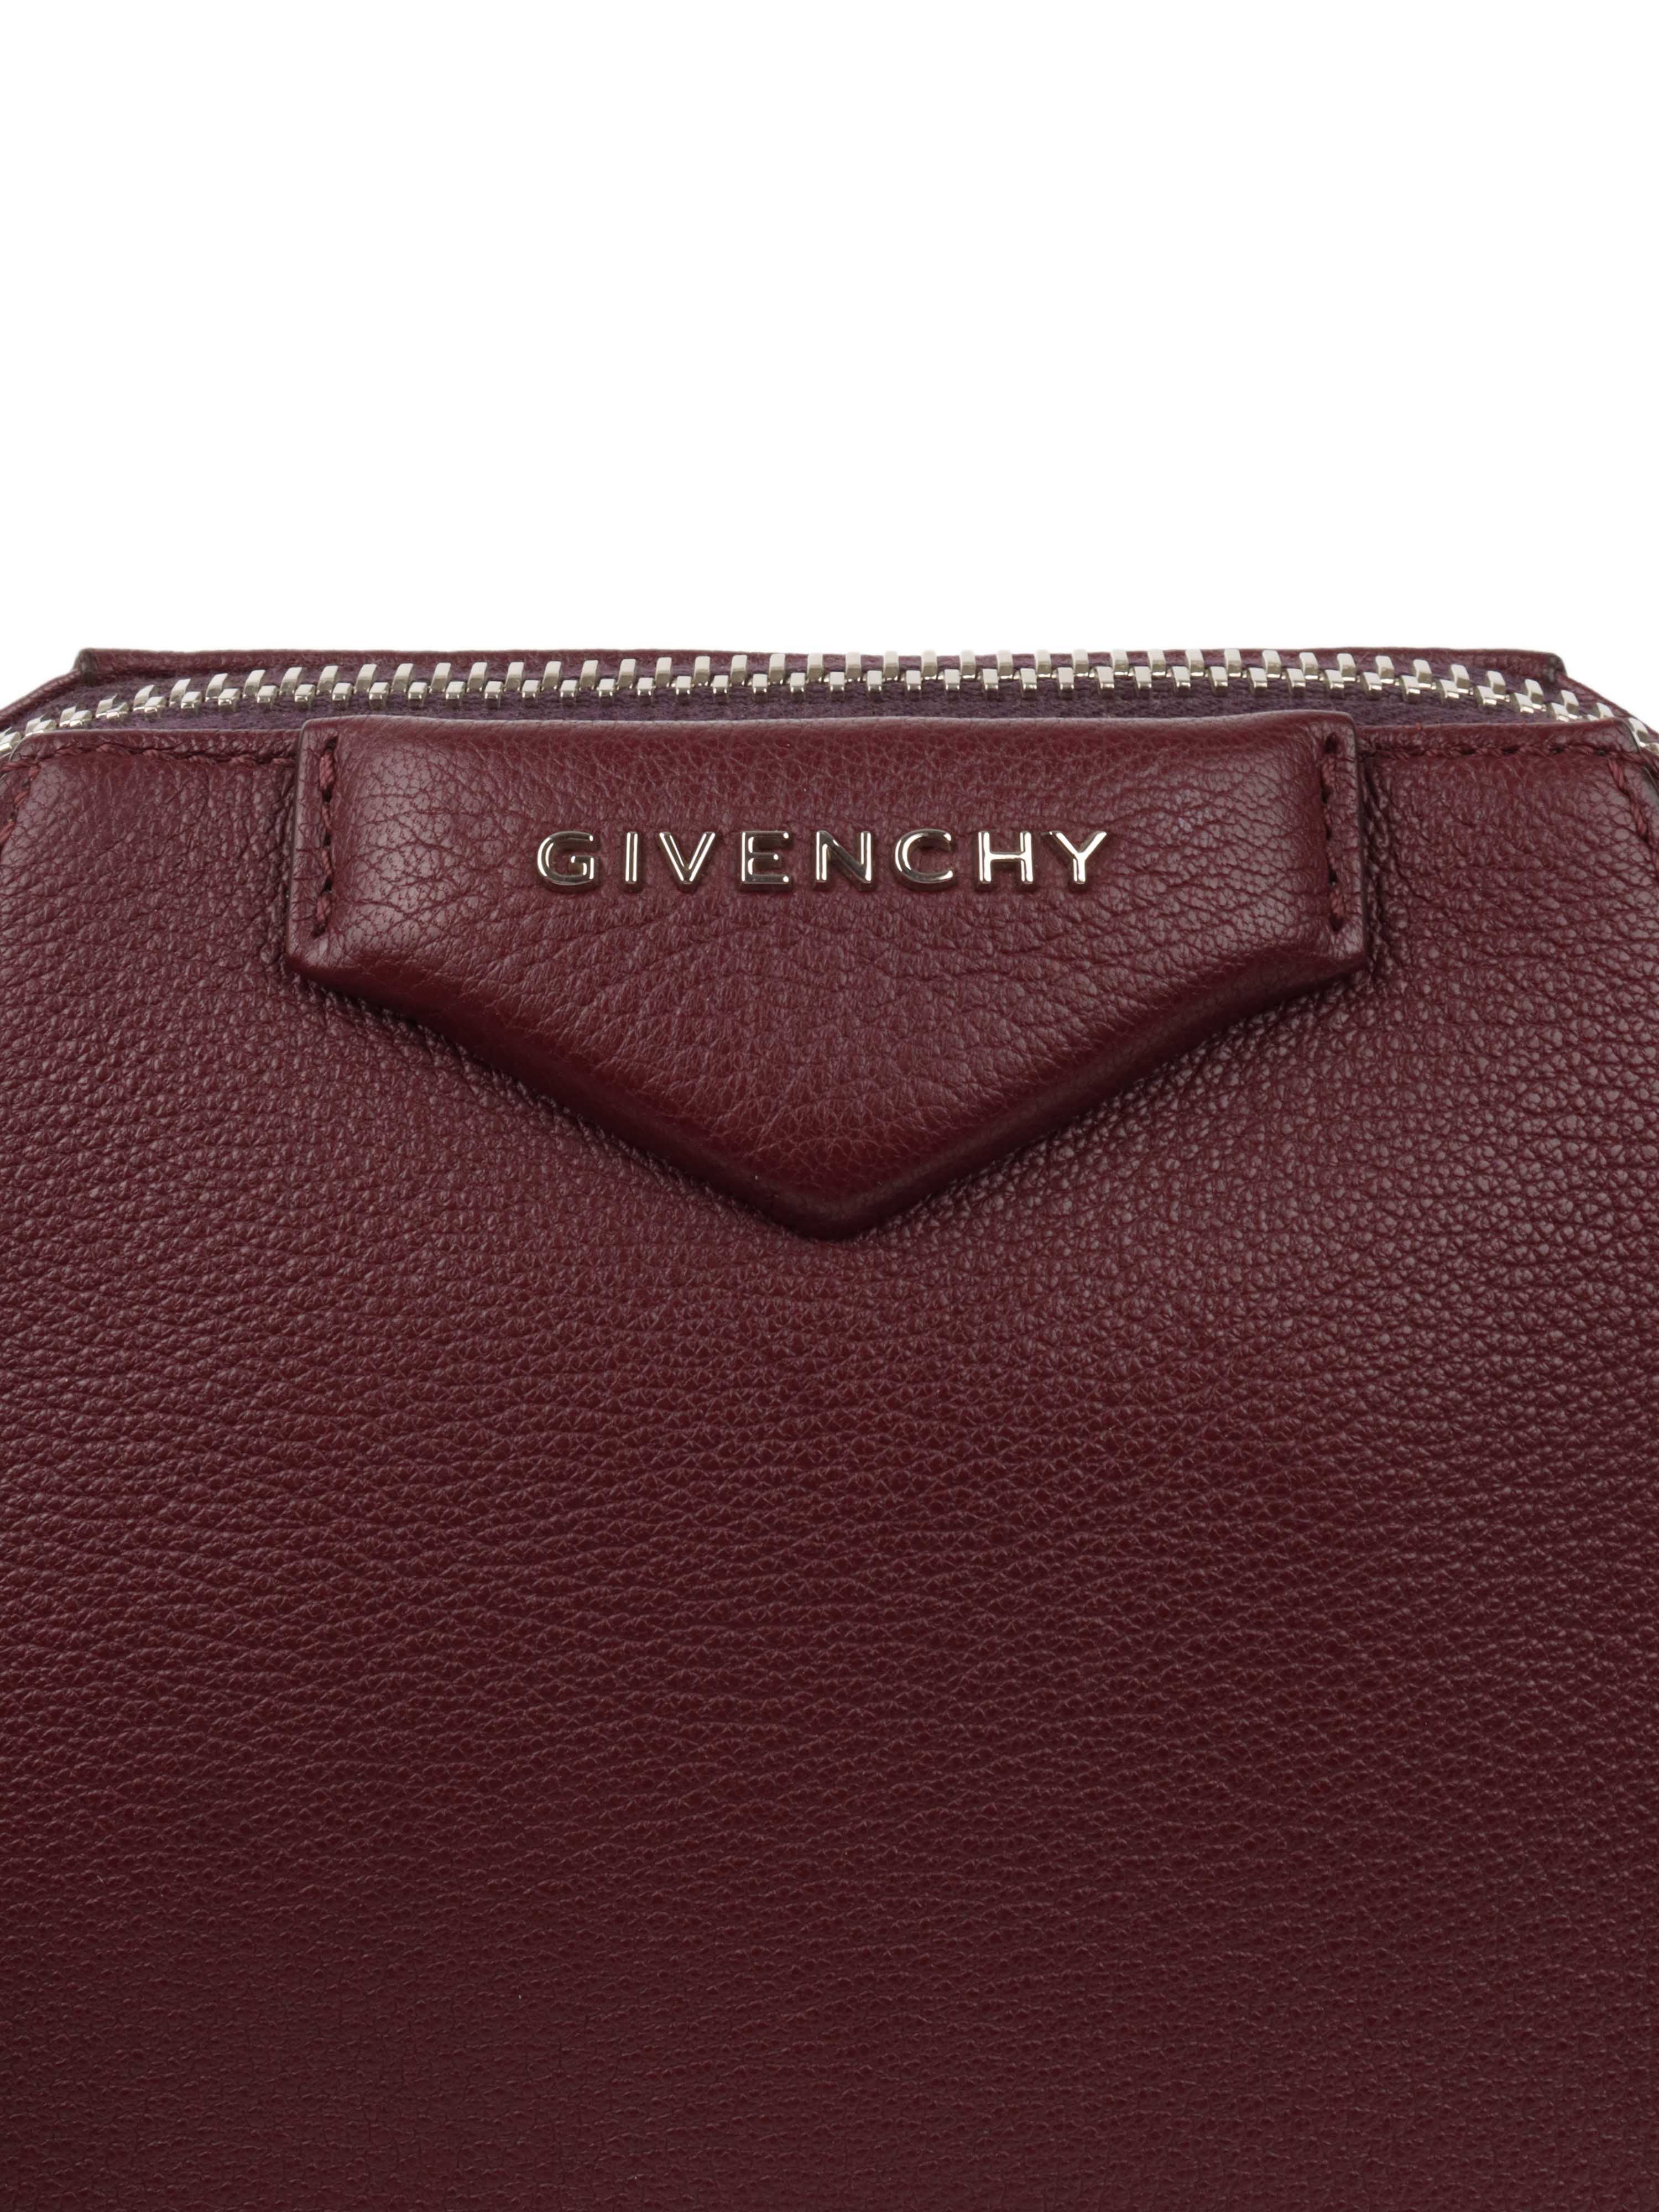 Givenchy Burgundy Antigona Beauty Clutch.